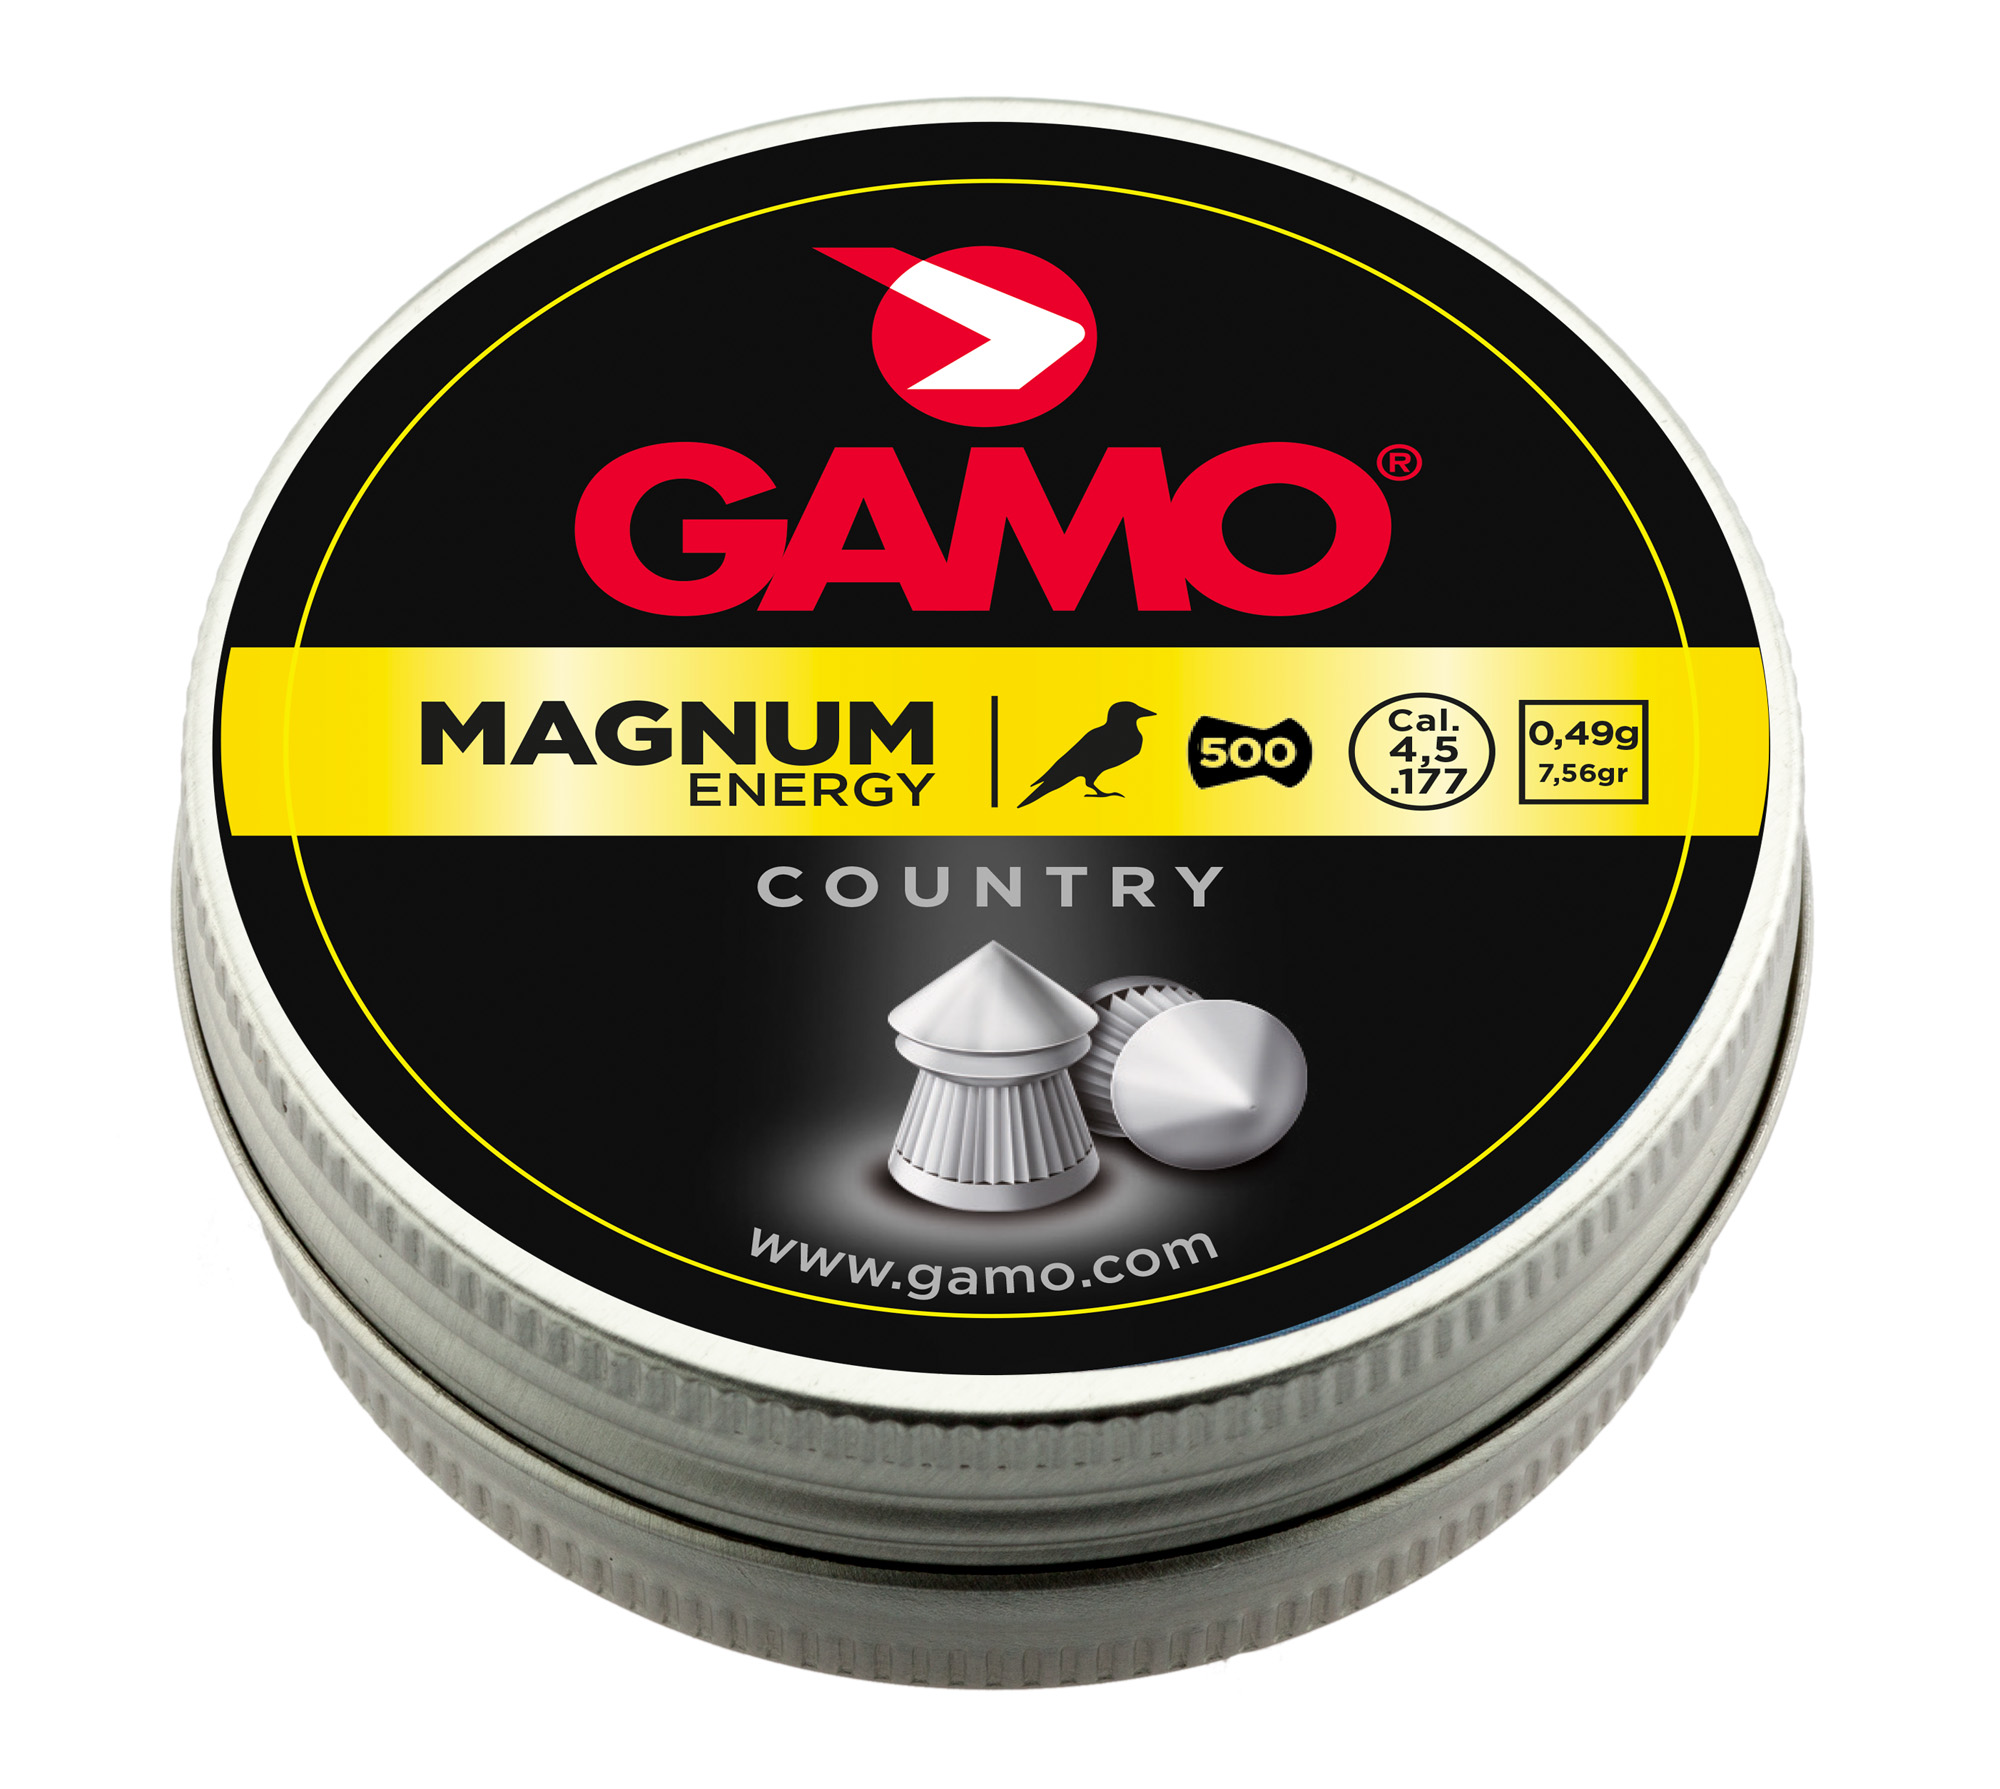 4.5 mm Plombs Gamo Magnum Energy cal 